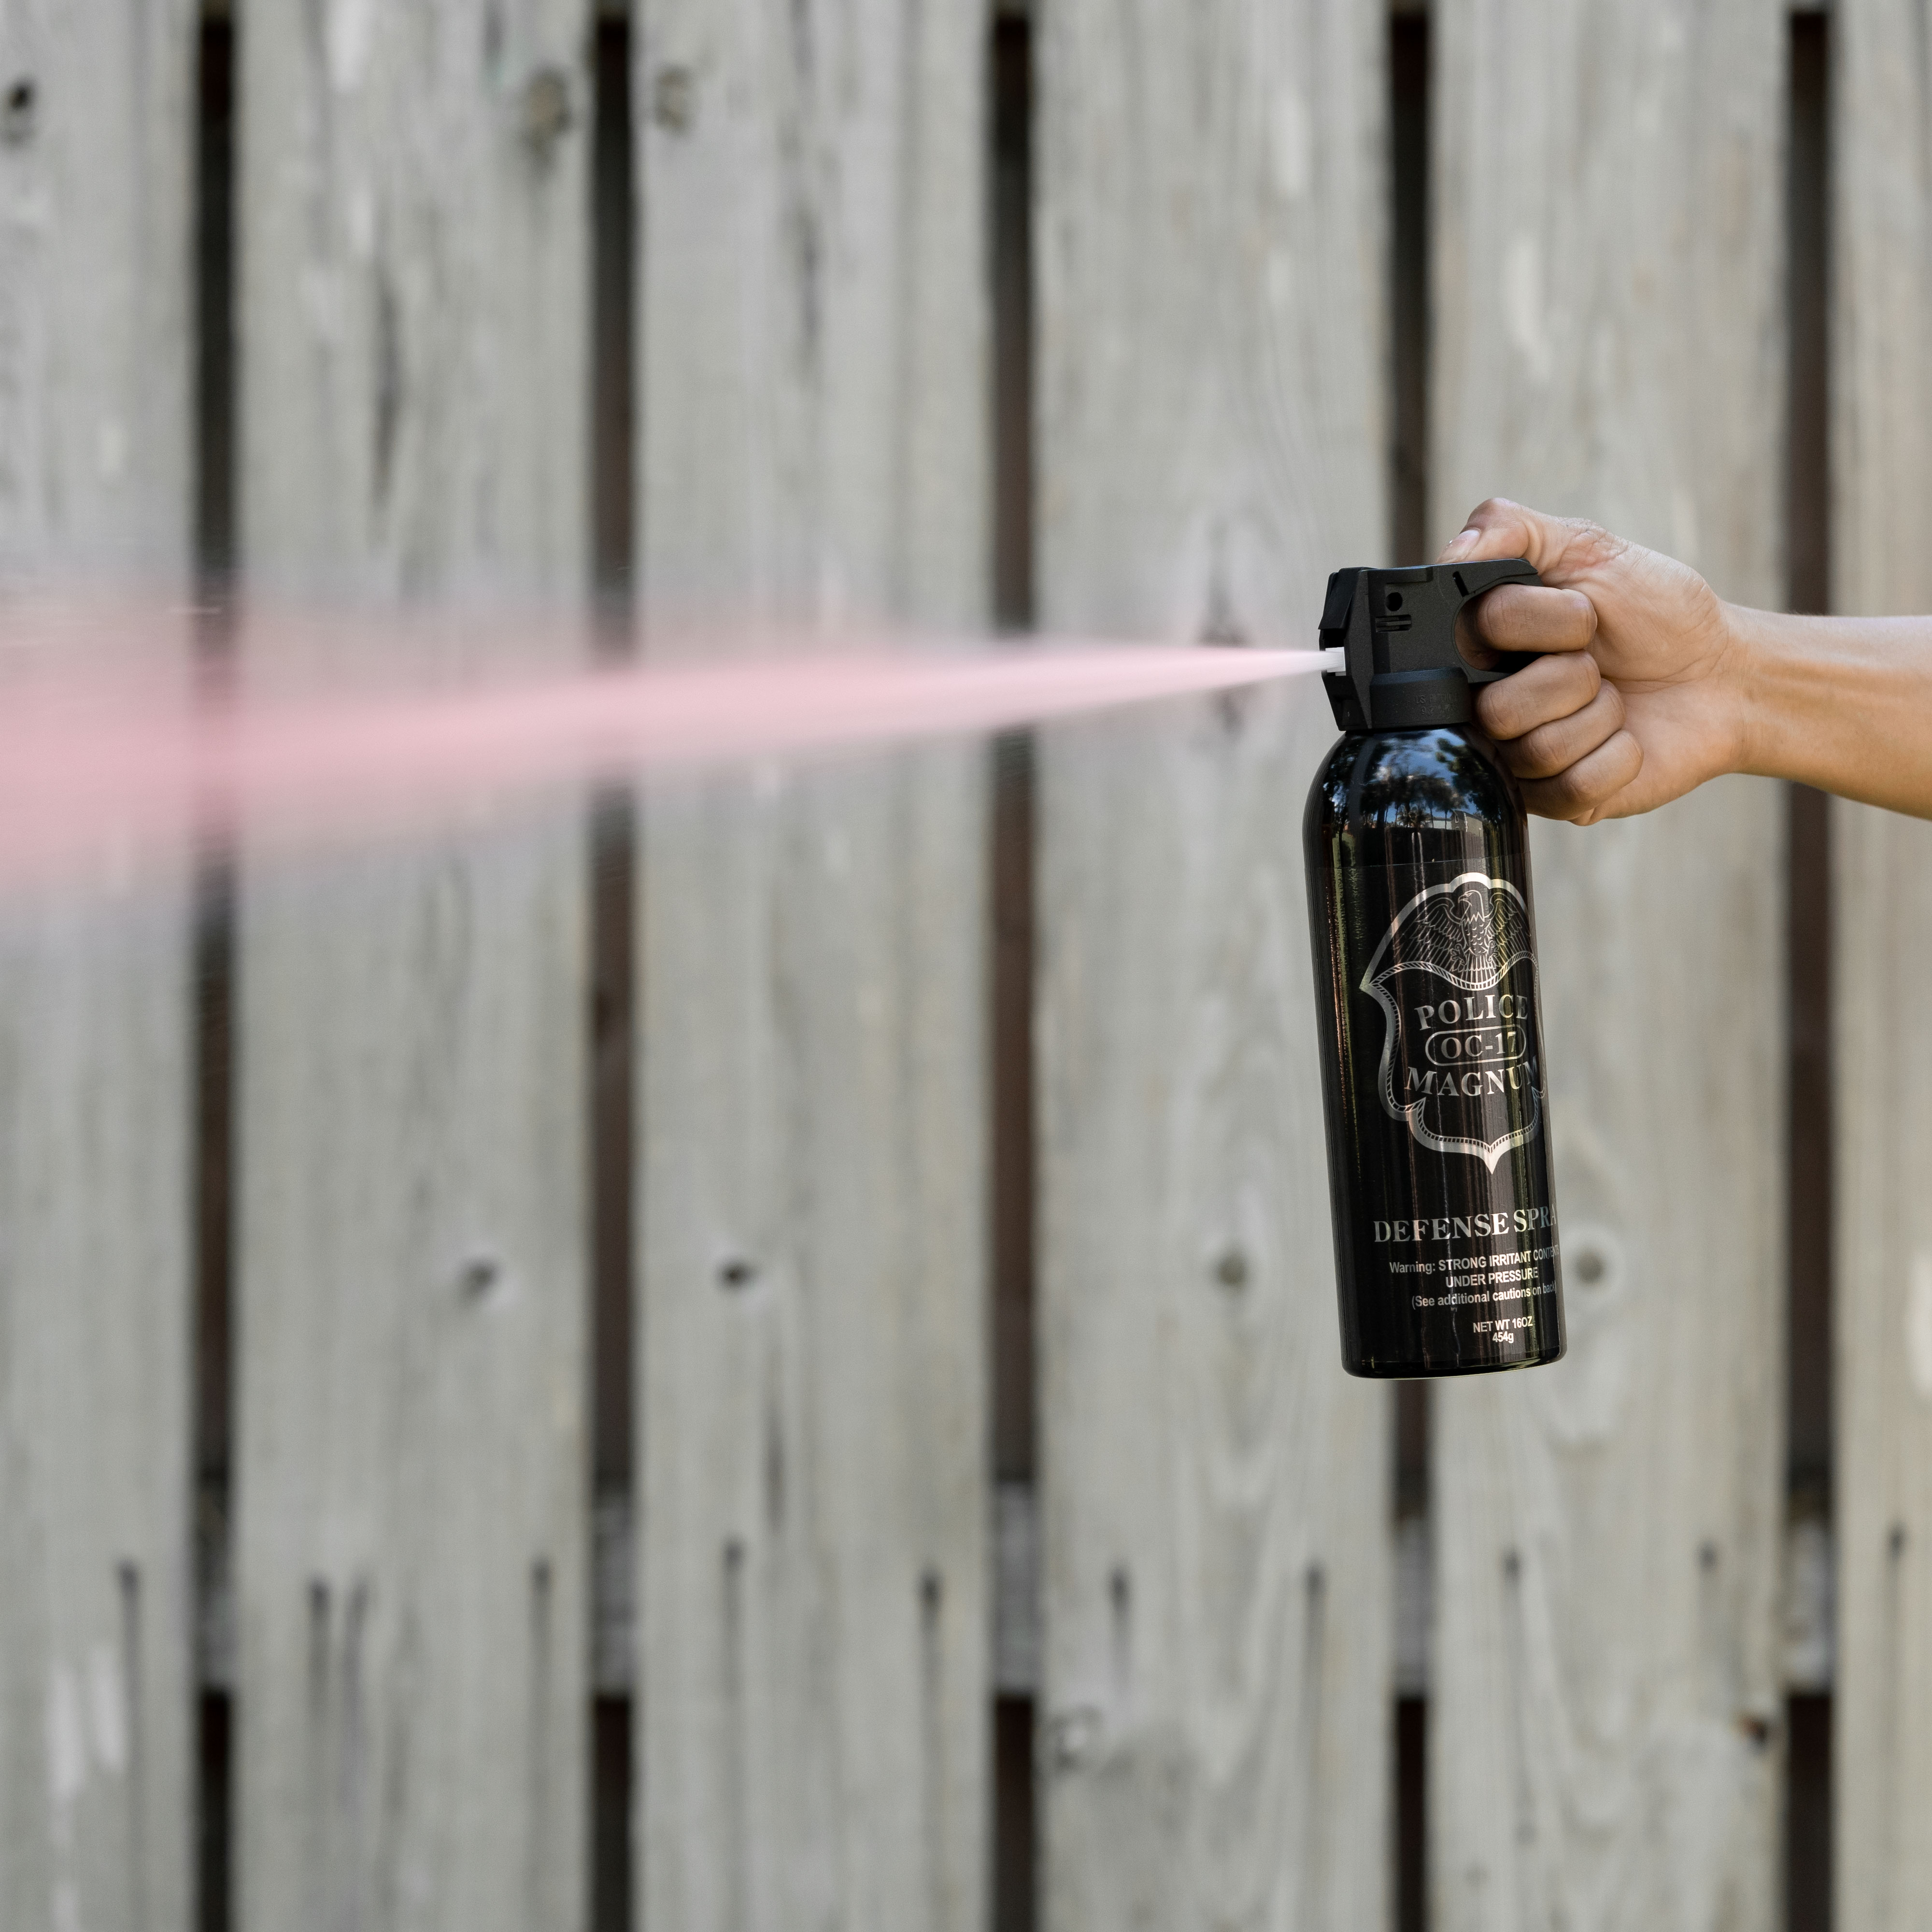 16oz fire master pepper spray fogger